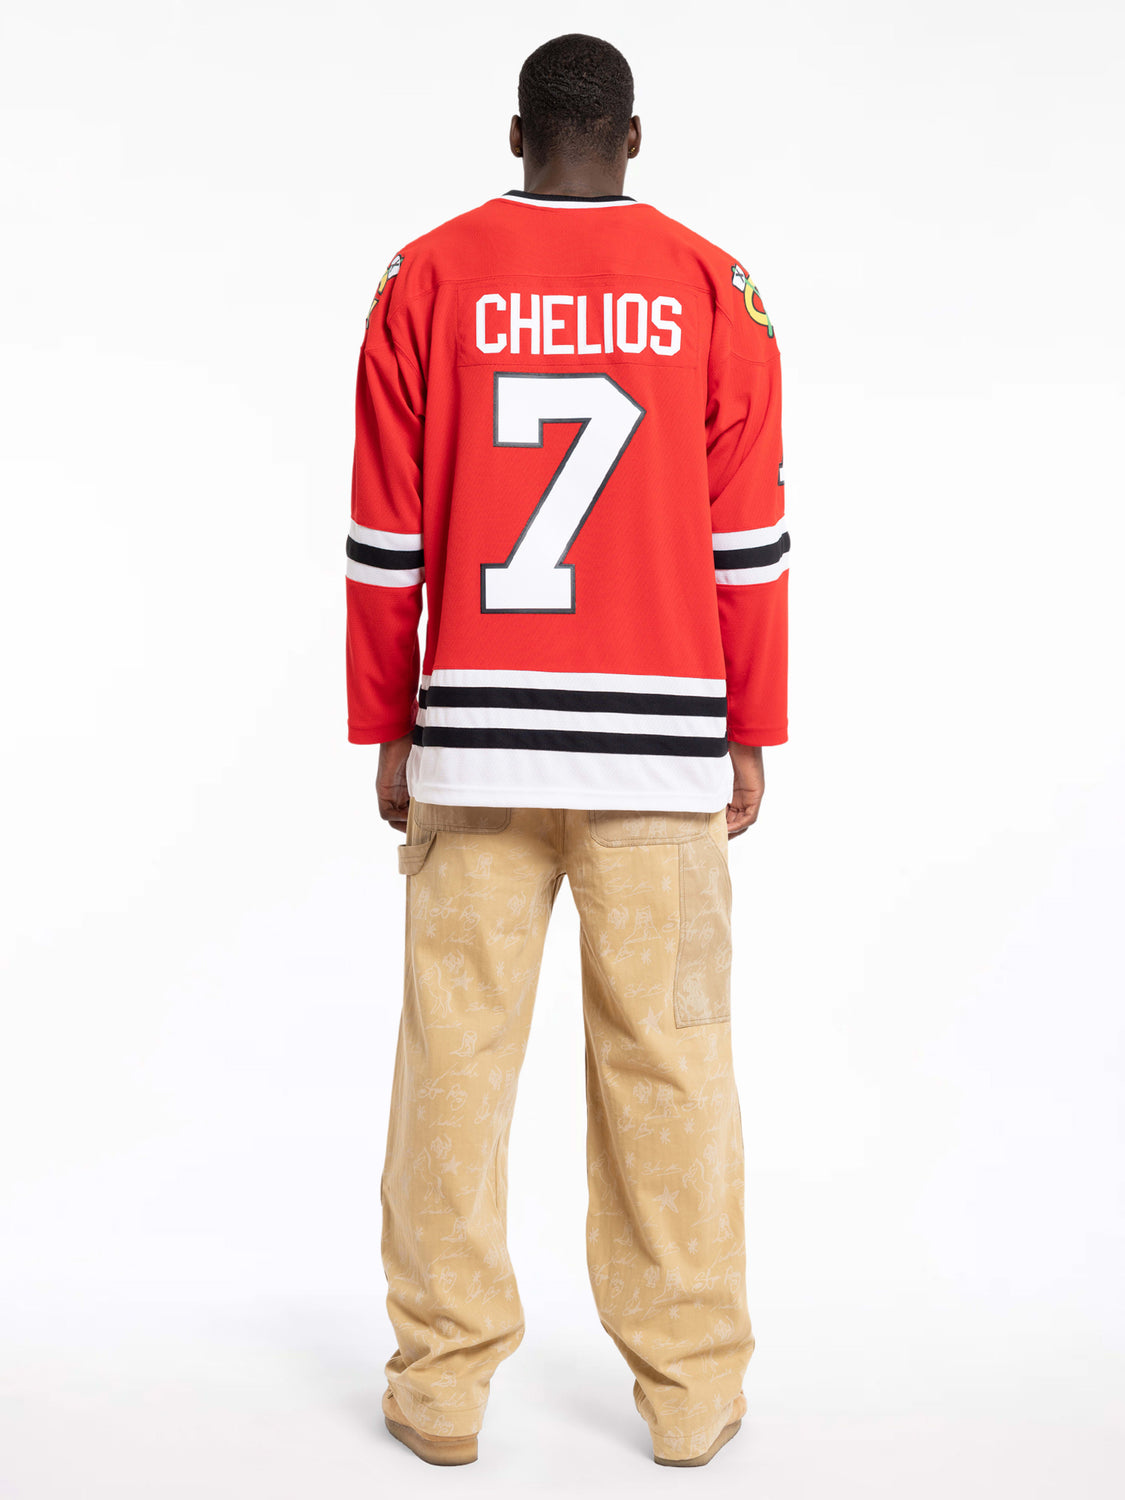 Chris Chelios 91-92 Chicago Blackhawks Hockey Jersey